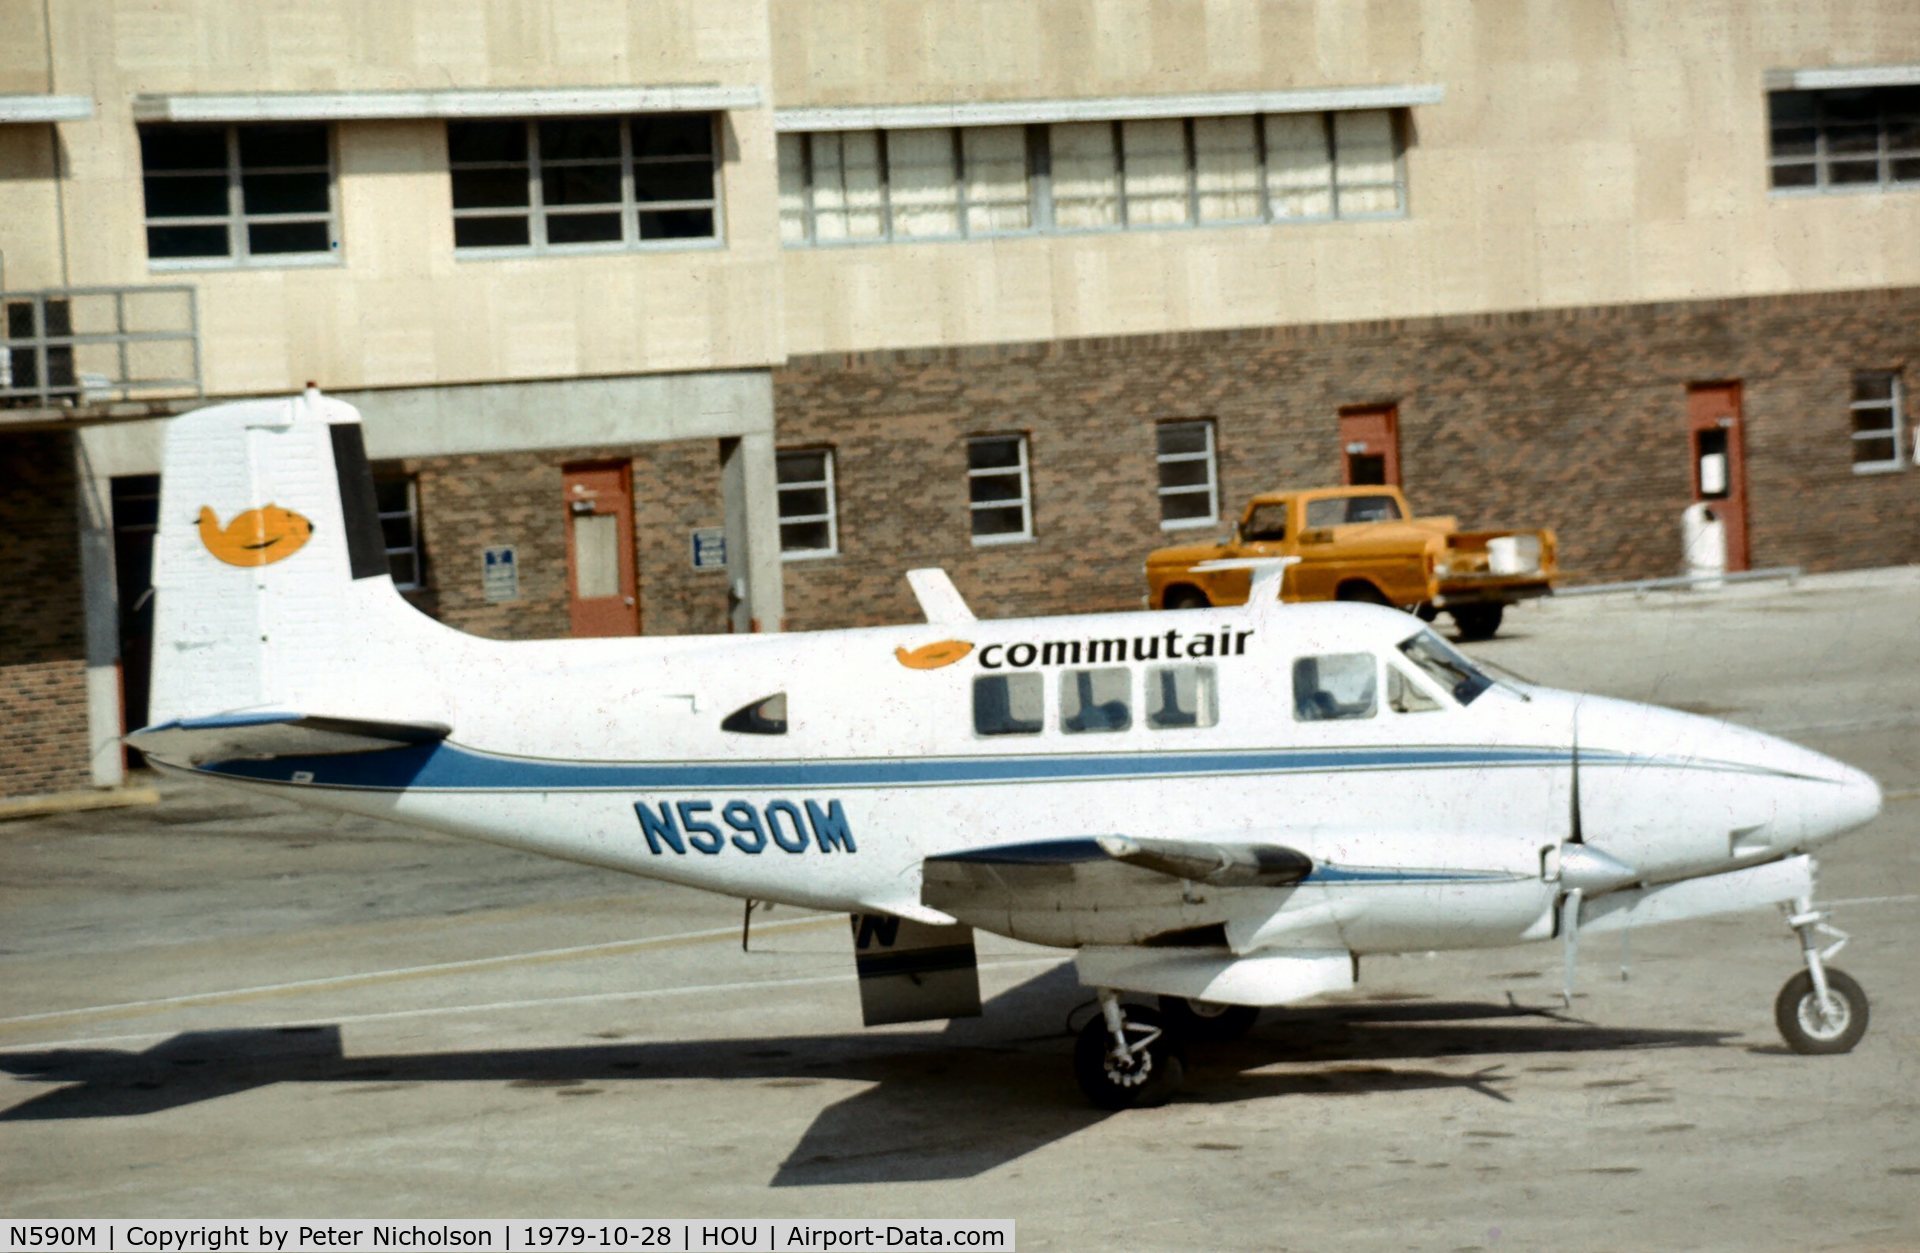 N590M, 1960 Beech 65 C/N LC-46, Beech Queen Air of Commutair seen at Houston Hobby in October 1979.